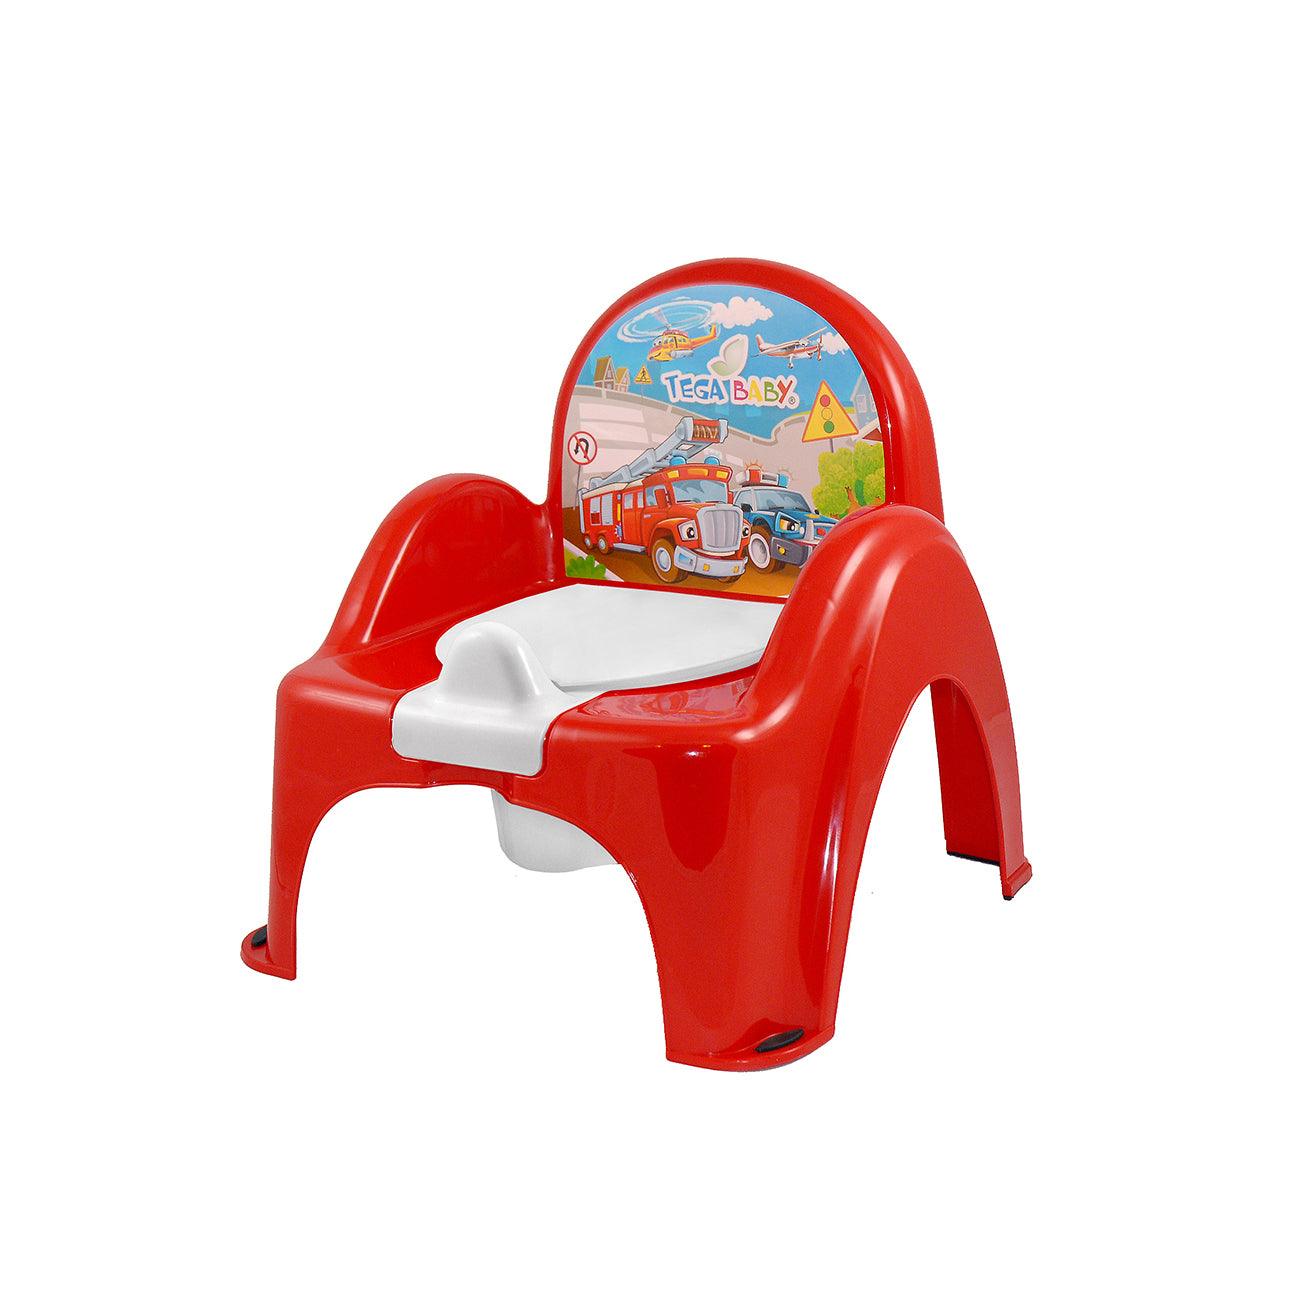 Tega baby - Tega Baby Potty Chair CARS red - Mari Kali Stores Cyprus